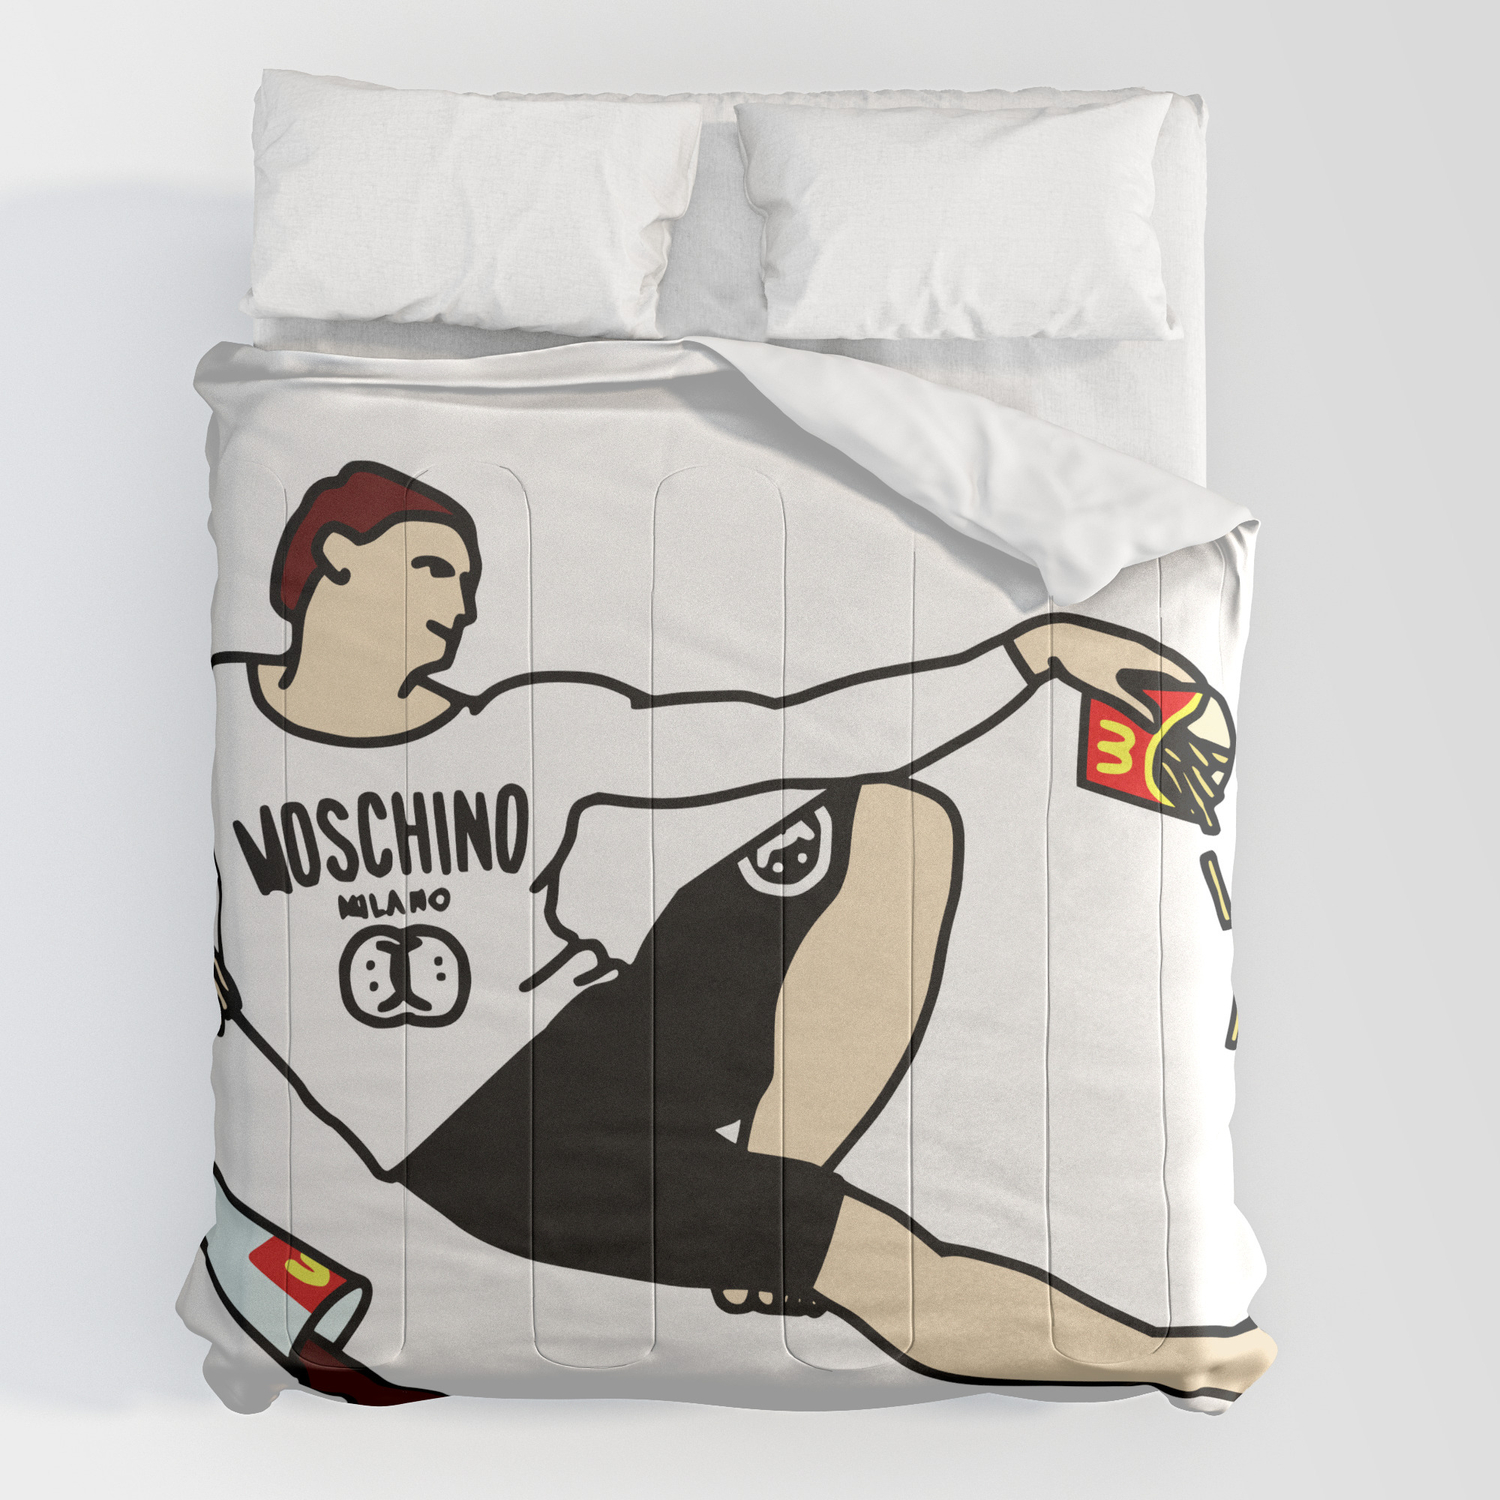 moschino bedding